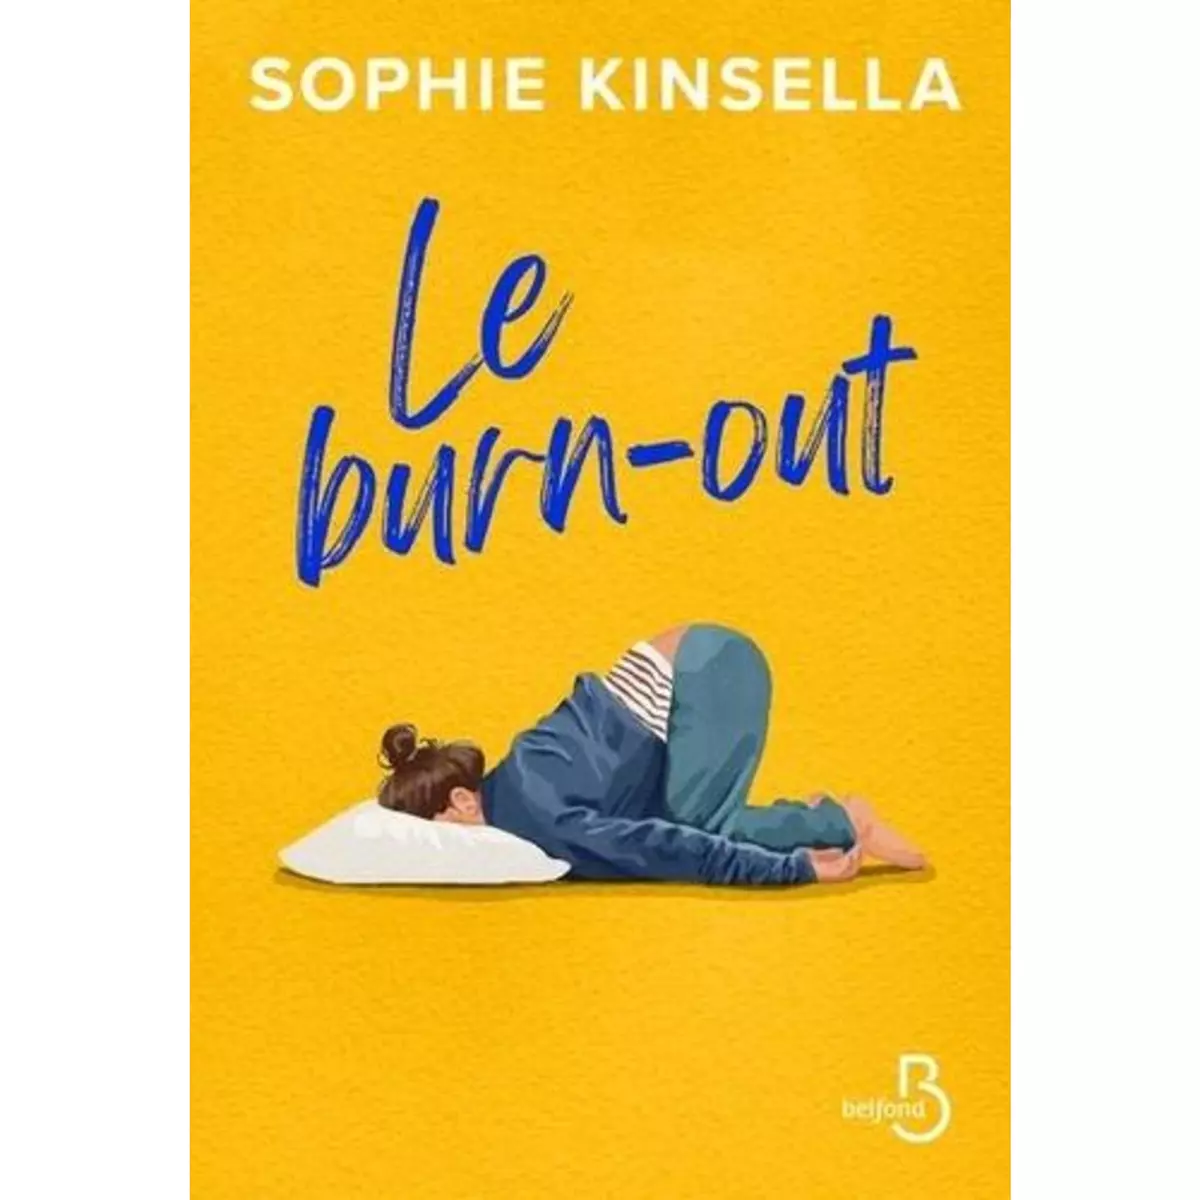  LE BURN-OUT, Kinsella Sophie